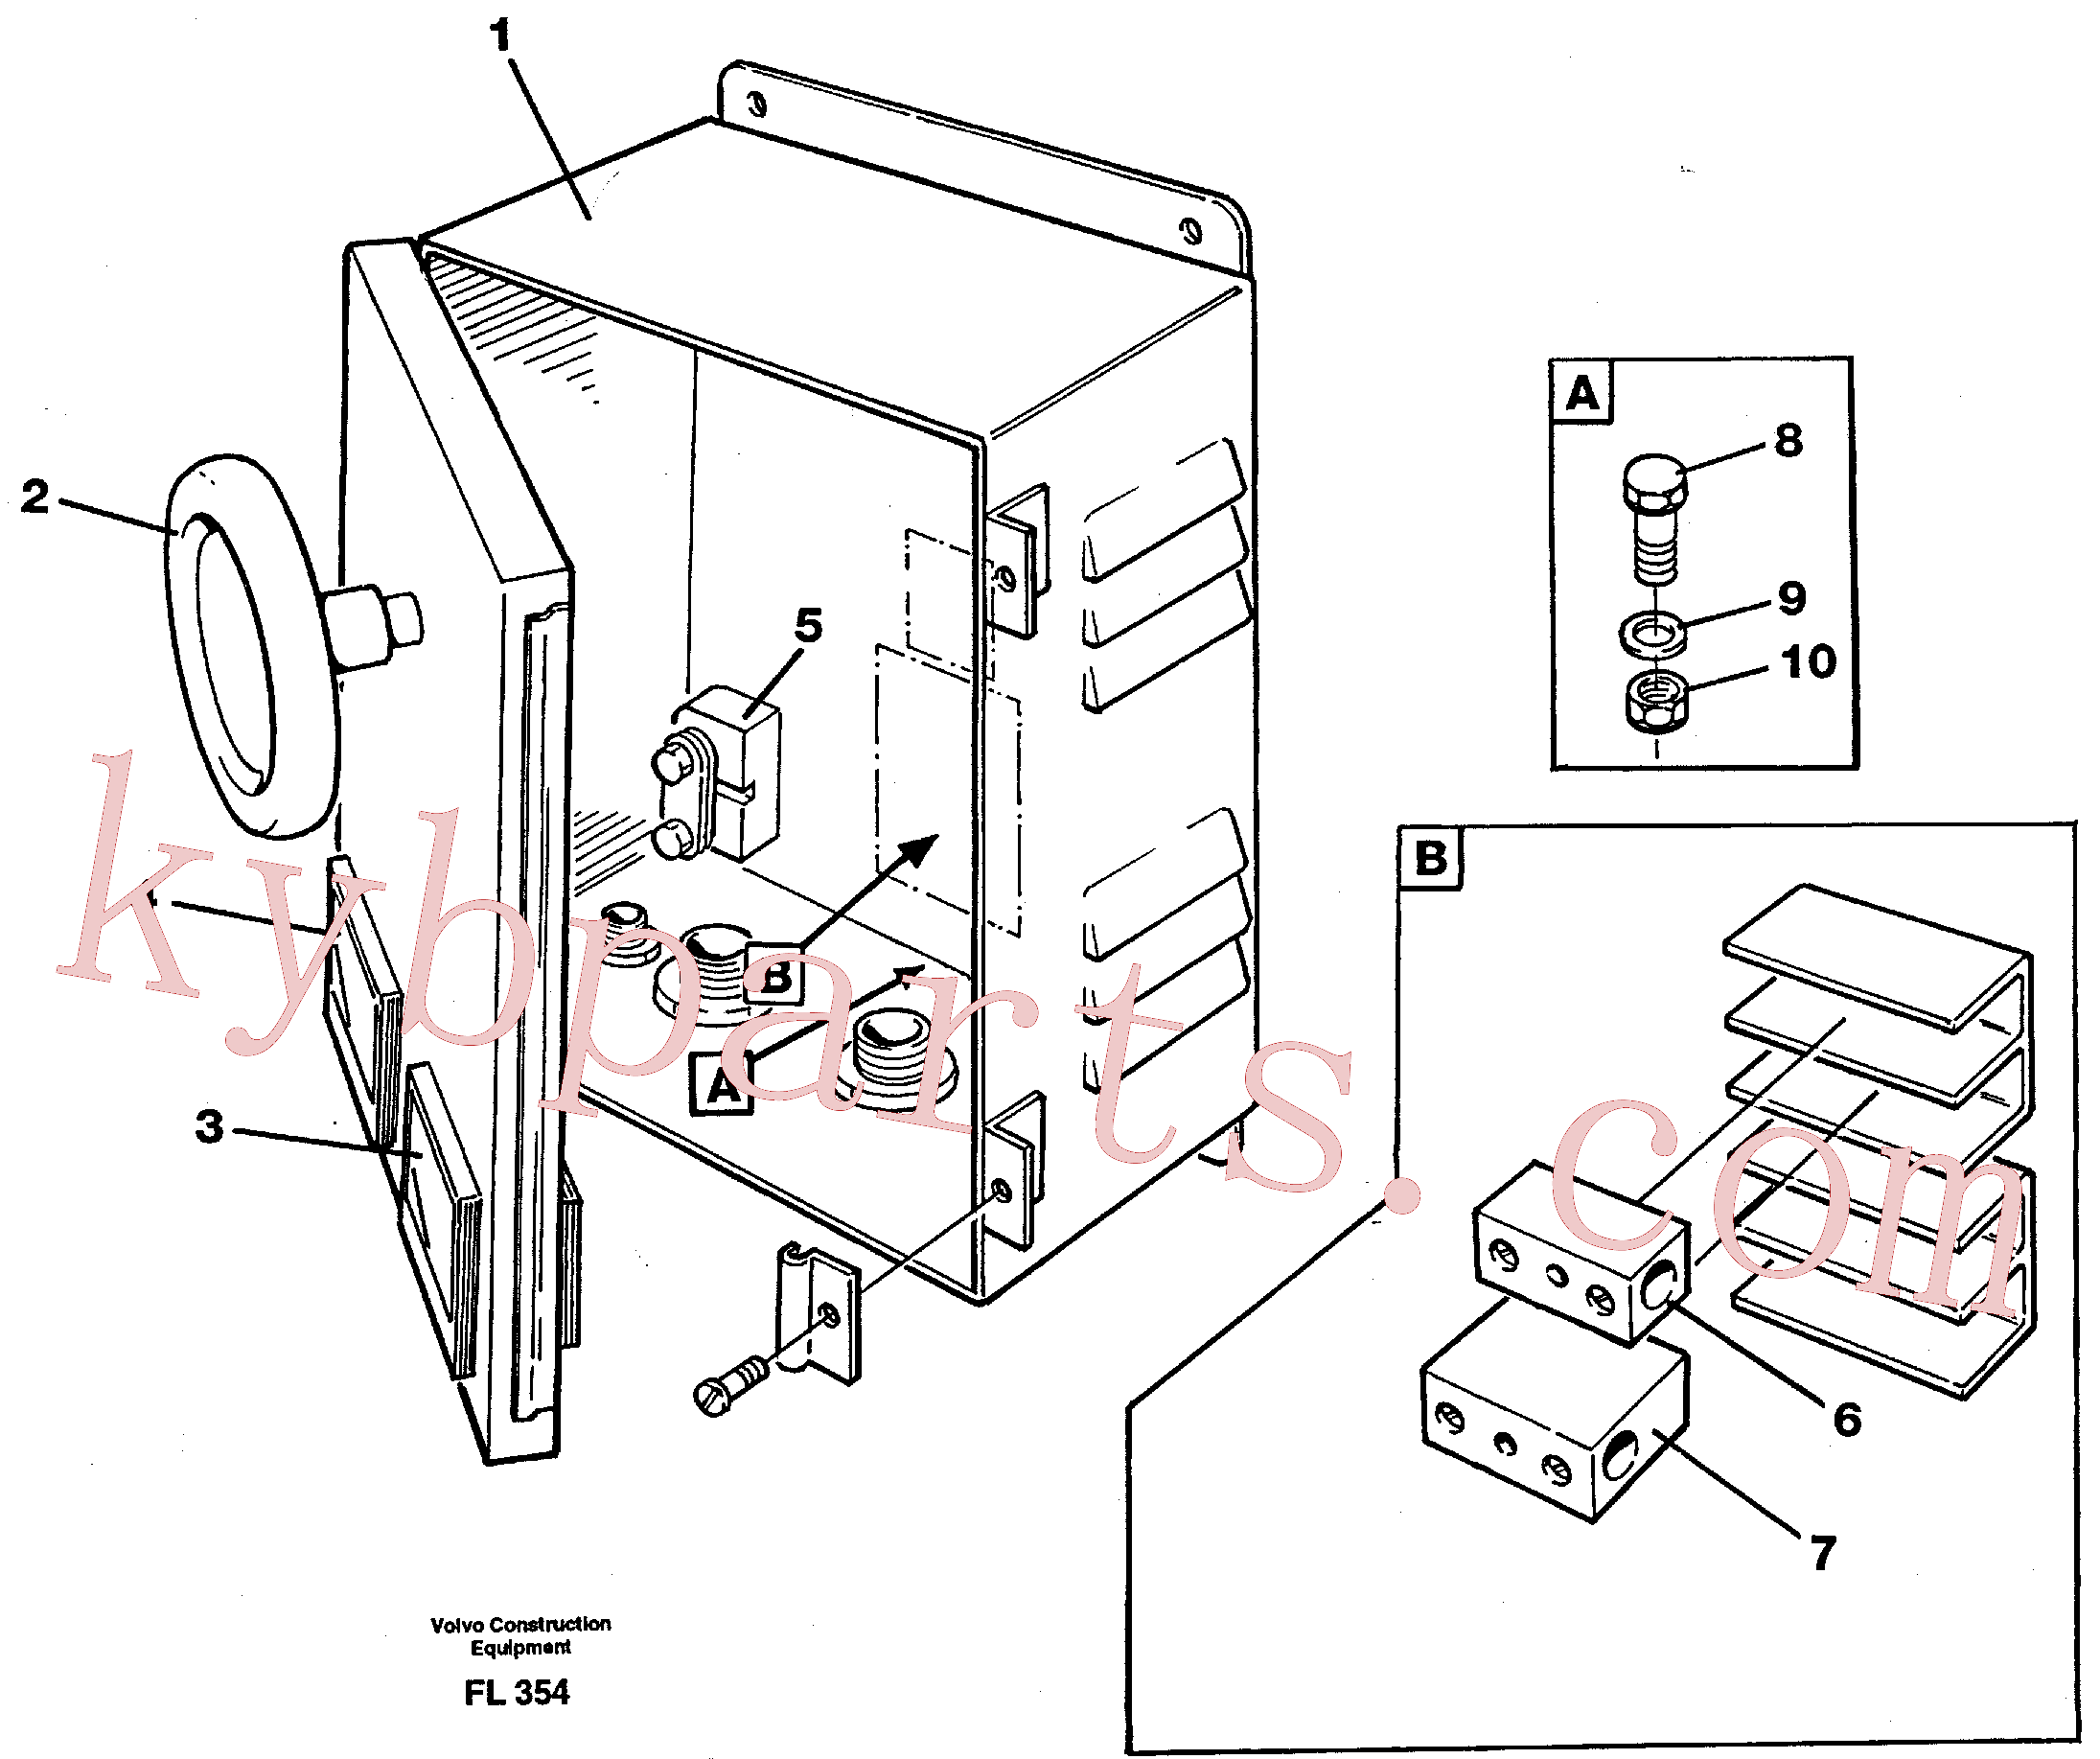 VOE14262984 for Volvo Magnet equipment Ohio, instrument box(FL354 assembly)